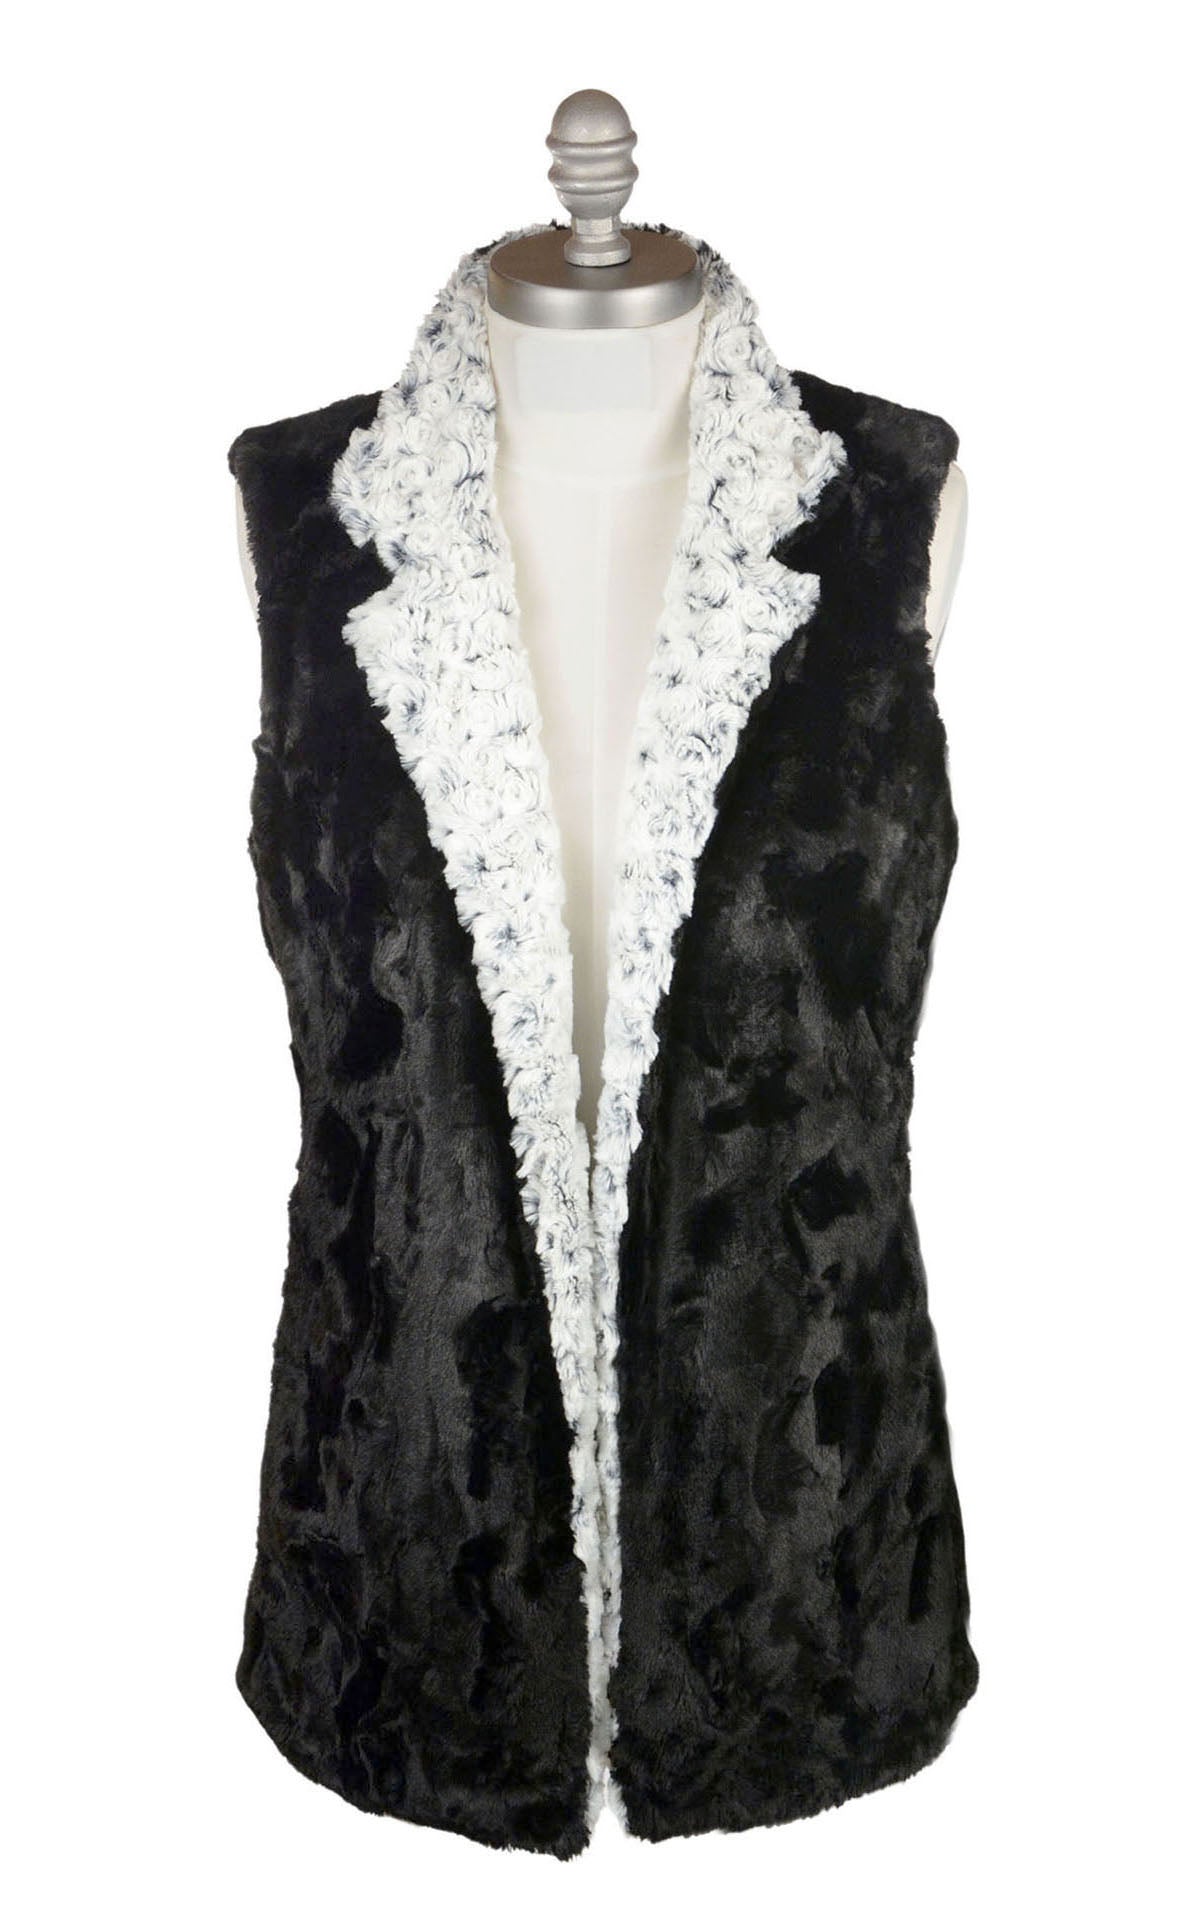 Mandarin Vest Short Reversed - Rosebud Faux Fur in Black lined Cuddly Black - Handmade in USA by Pandemonium Seattle